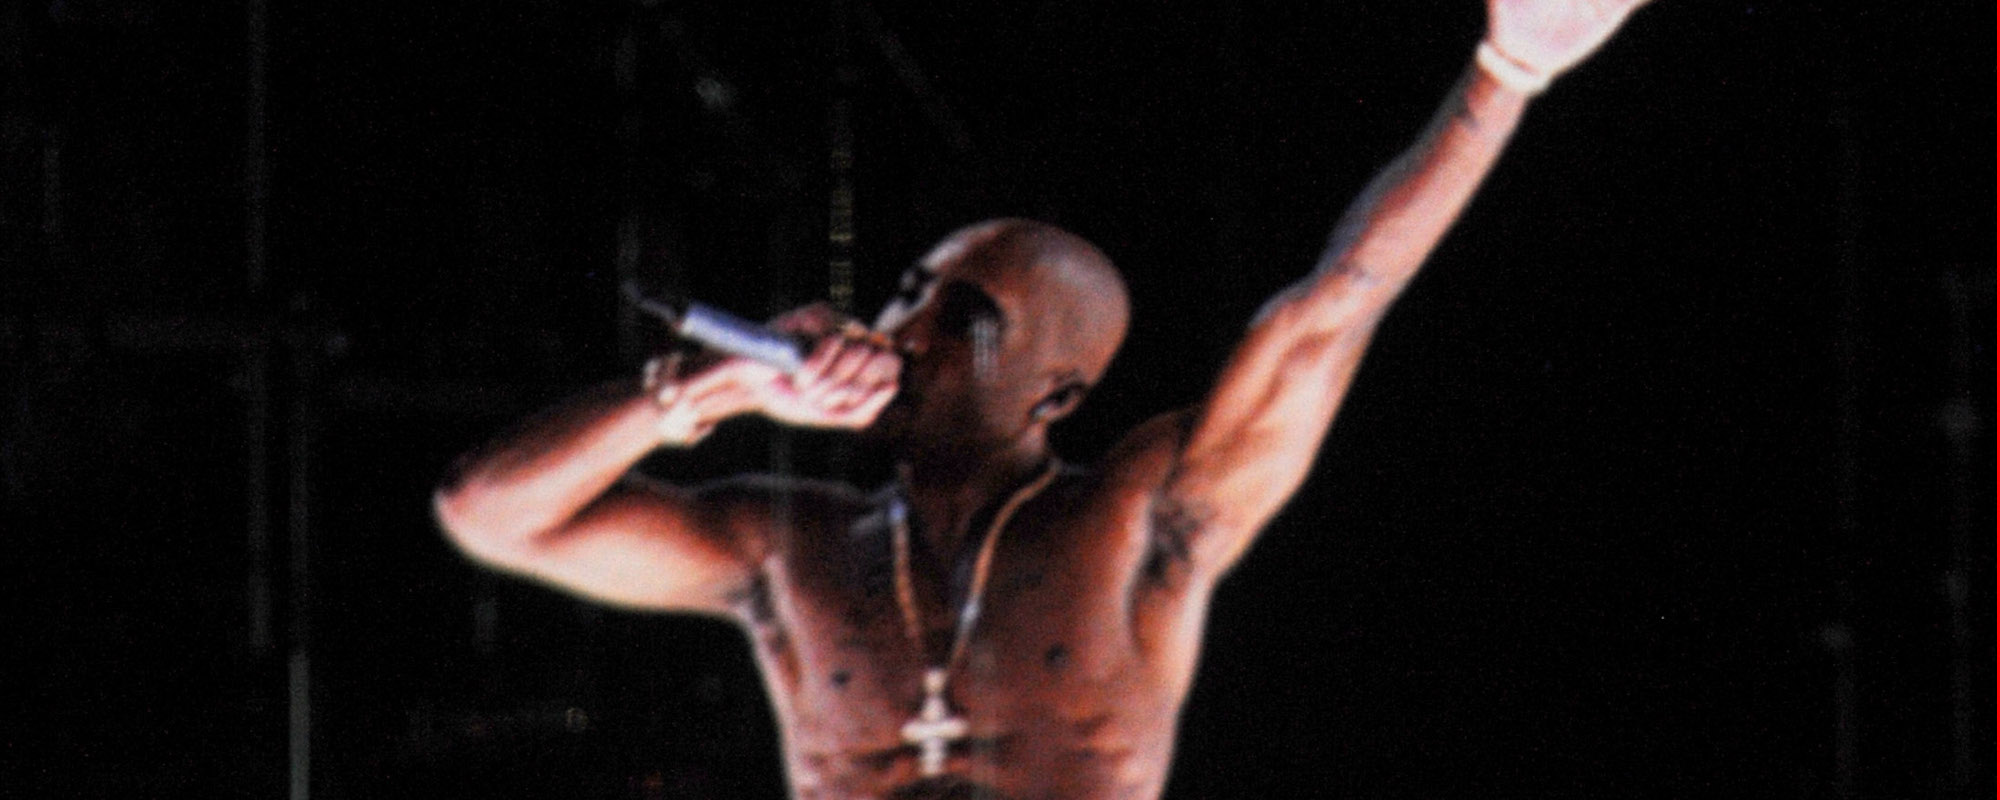 Tupac and The Notorious B.I.G.’s No. 1 Hits Ranked